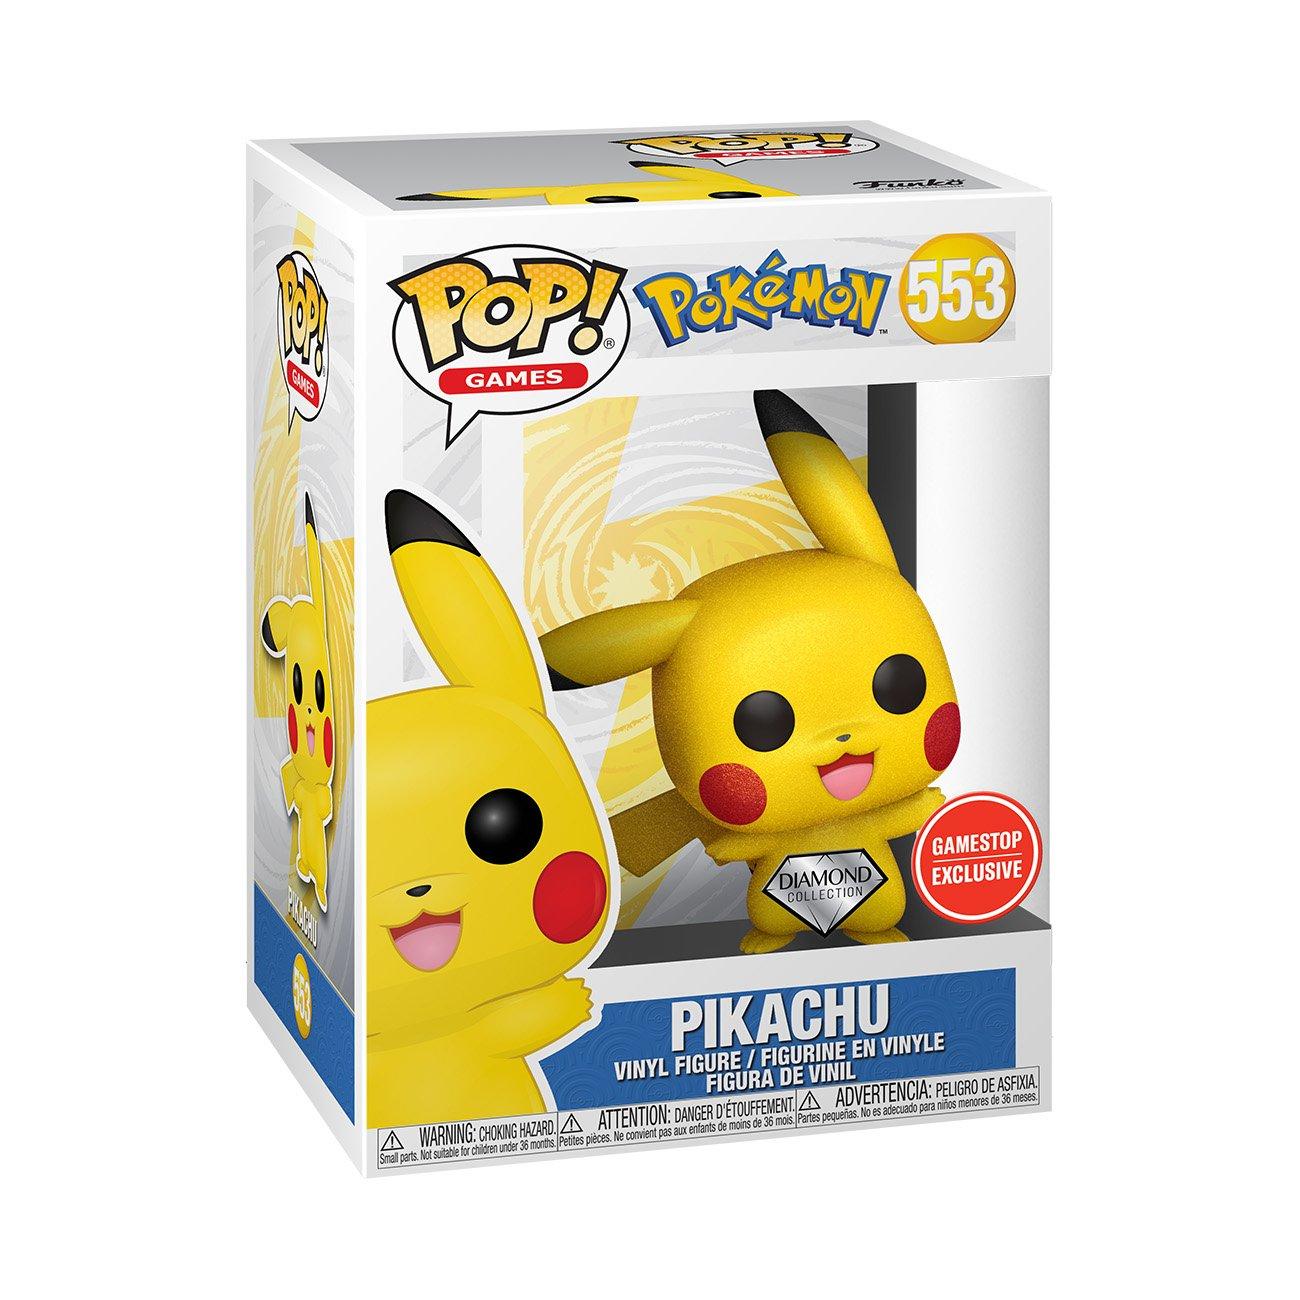 Pikachu Pearlescent Pop! Figure by Funko